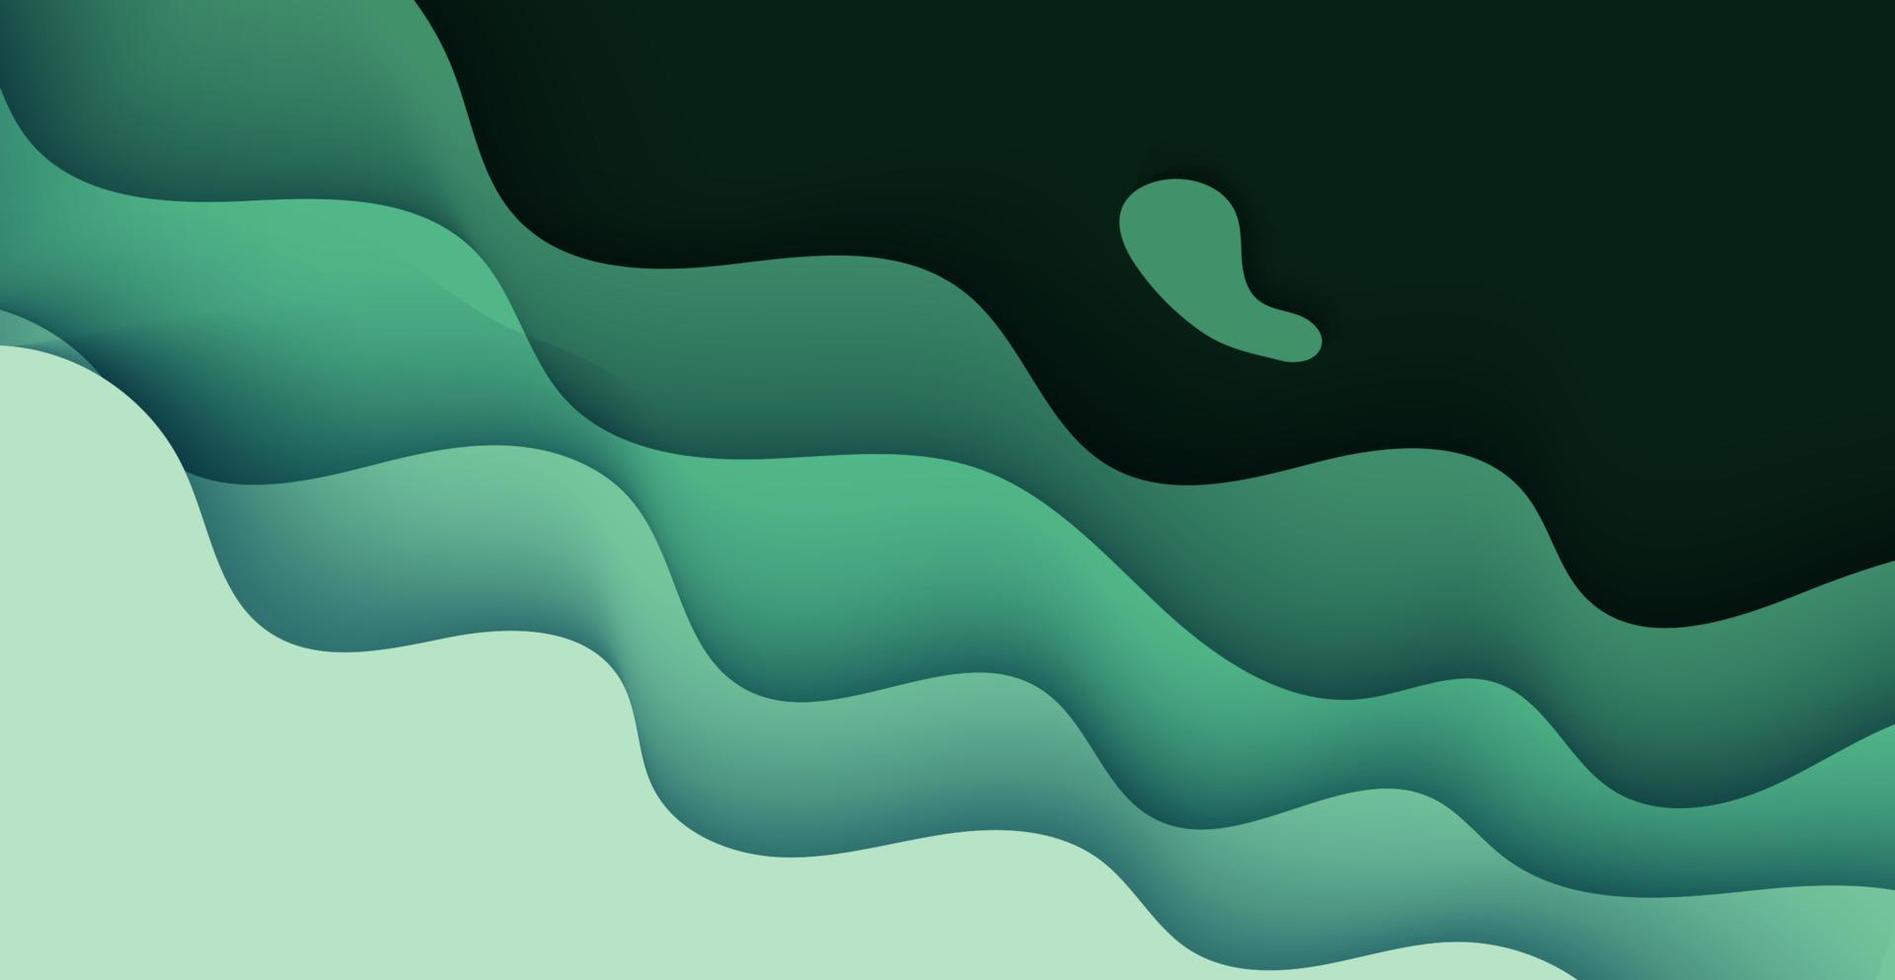 capas de corte de papel 3d de textura verde de múltiples capas en banner de vector degradado. diseño de fondo de arte de corte de papel abstracto para plantilla de sitio web. concepto de mapa topográfico o corte de papel de origami suave